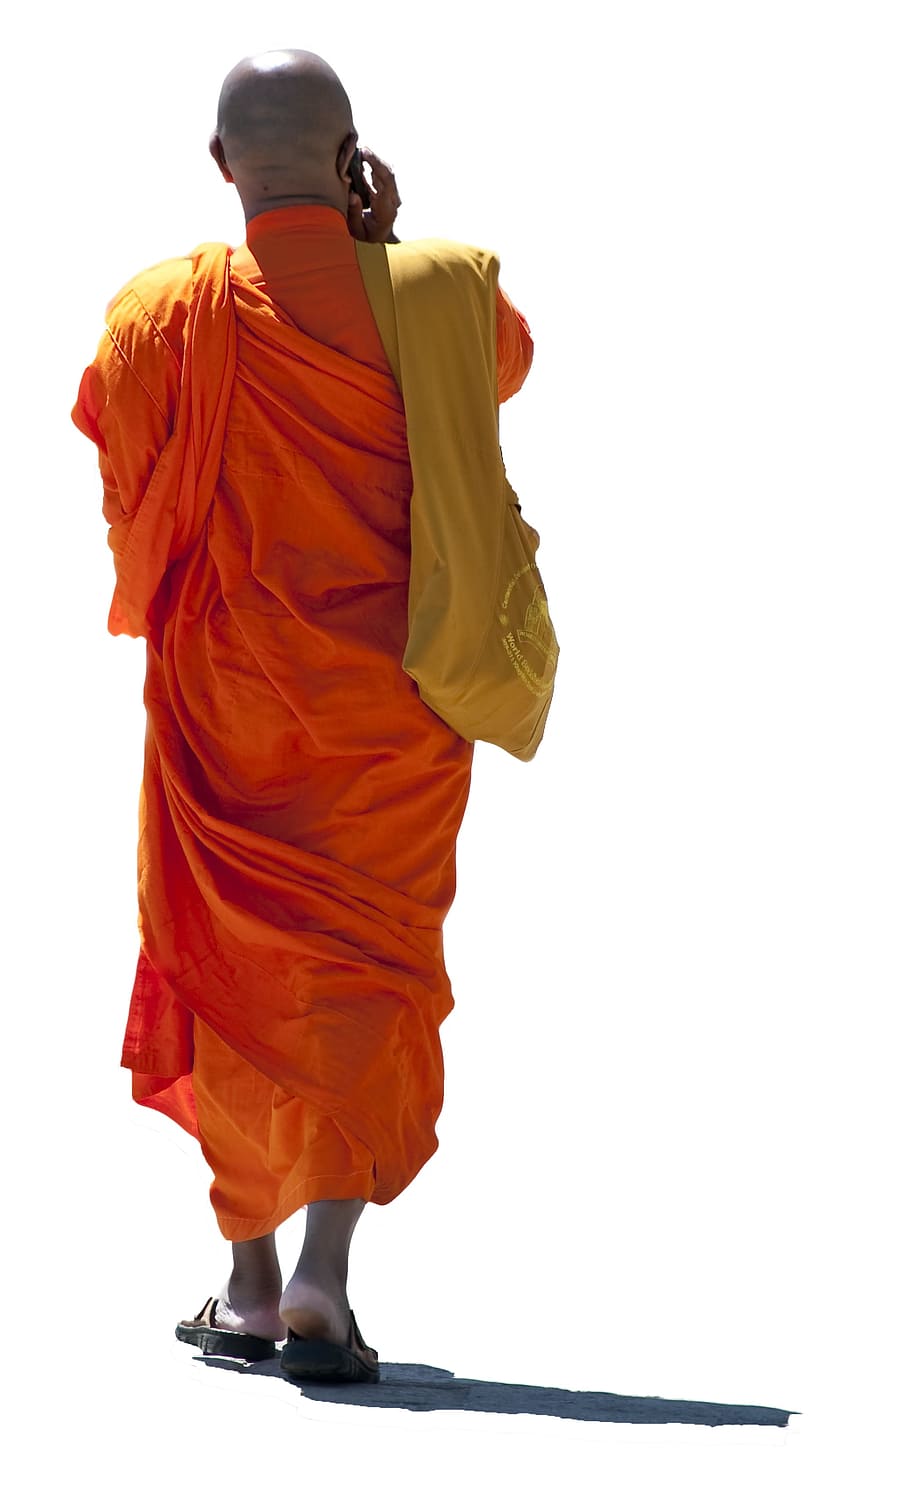 homem, roupa de monge, em pé, fechar, foto, monge, roupa, fechar-se, monge budista, falar móvel